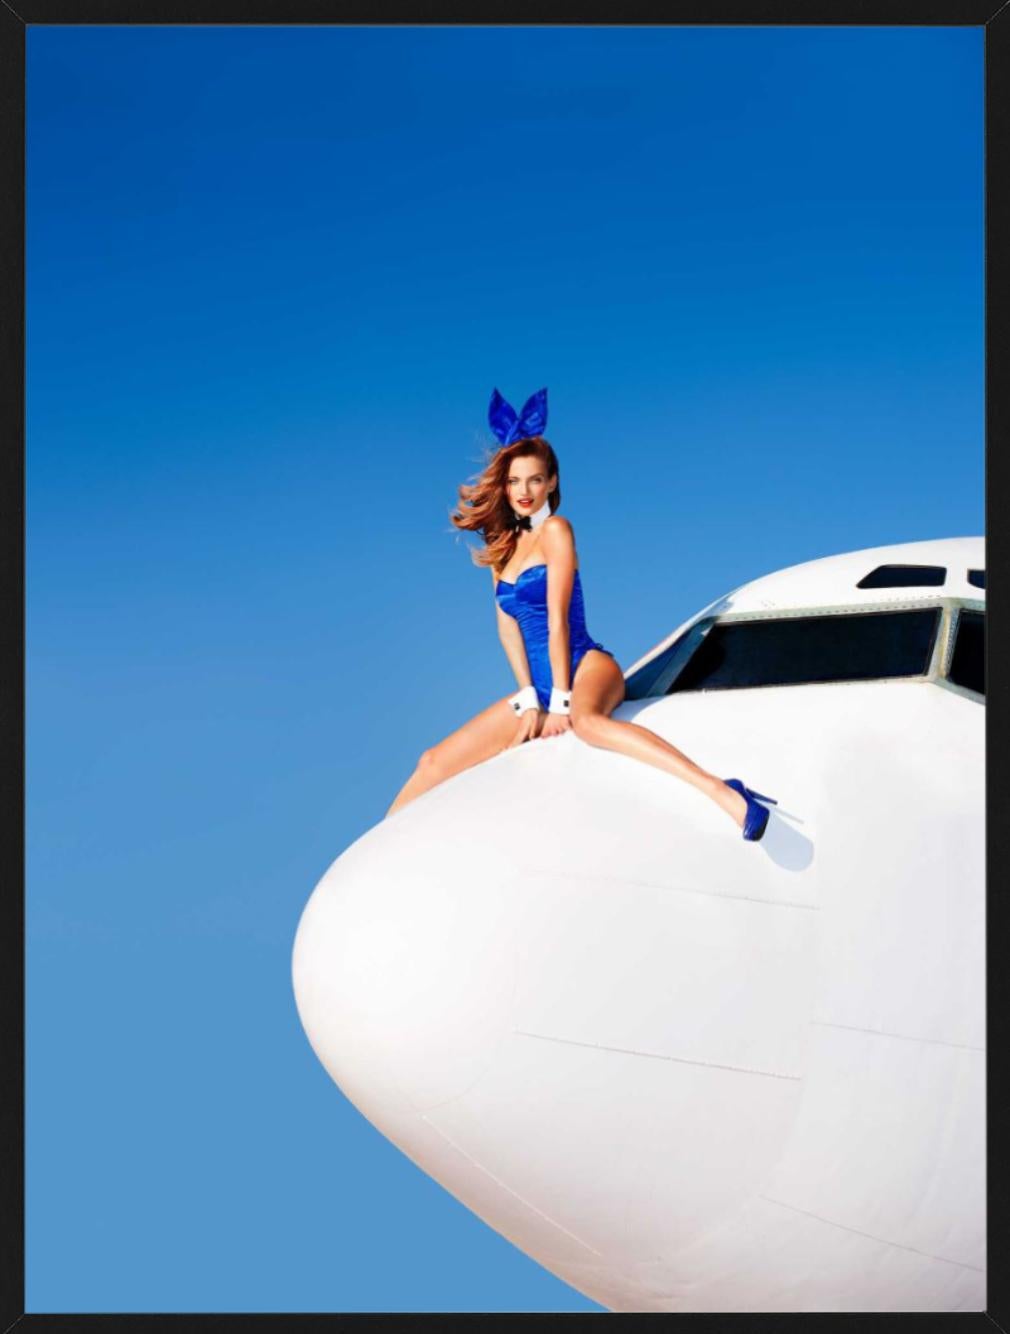 Flight TK75 - Modell in buntem Kostüm sitzend auf Plane, Kunstfotografie 2014 – Photograph von Tony Kelly